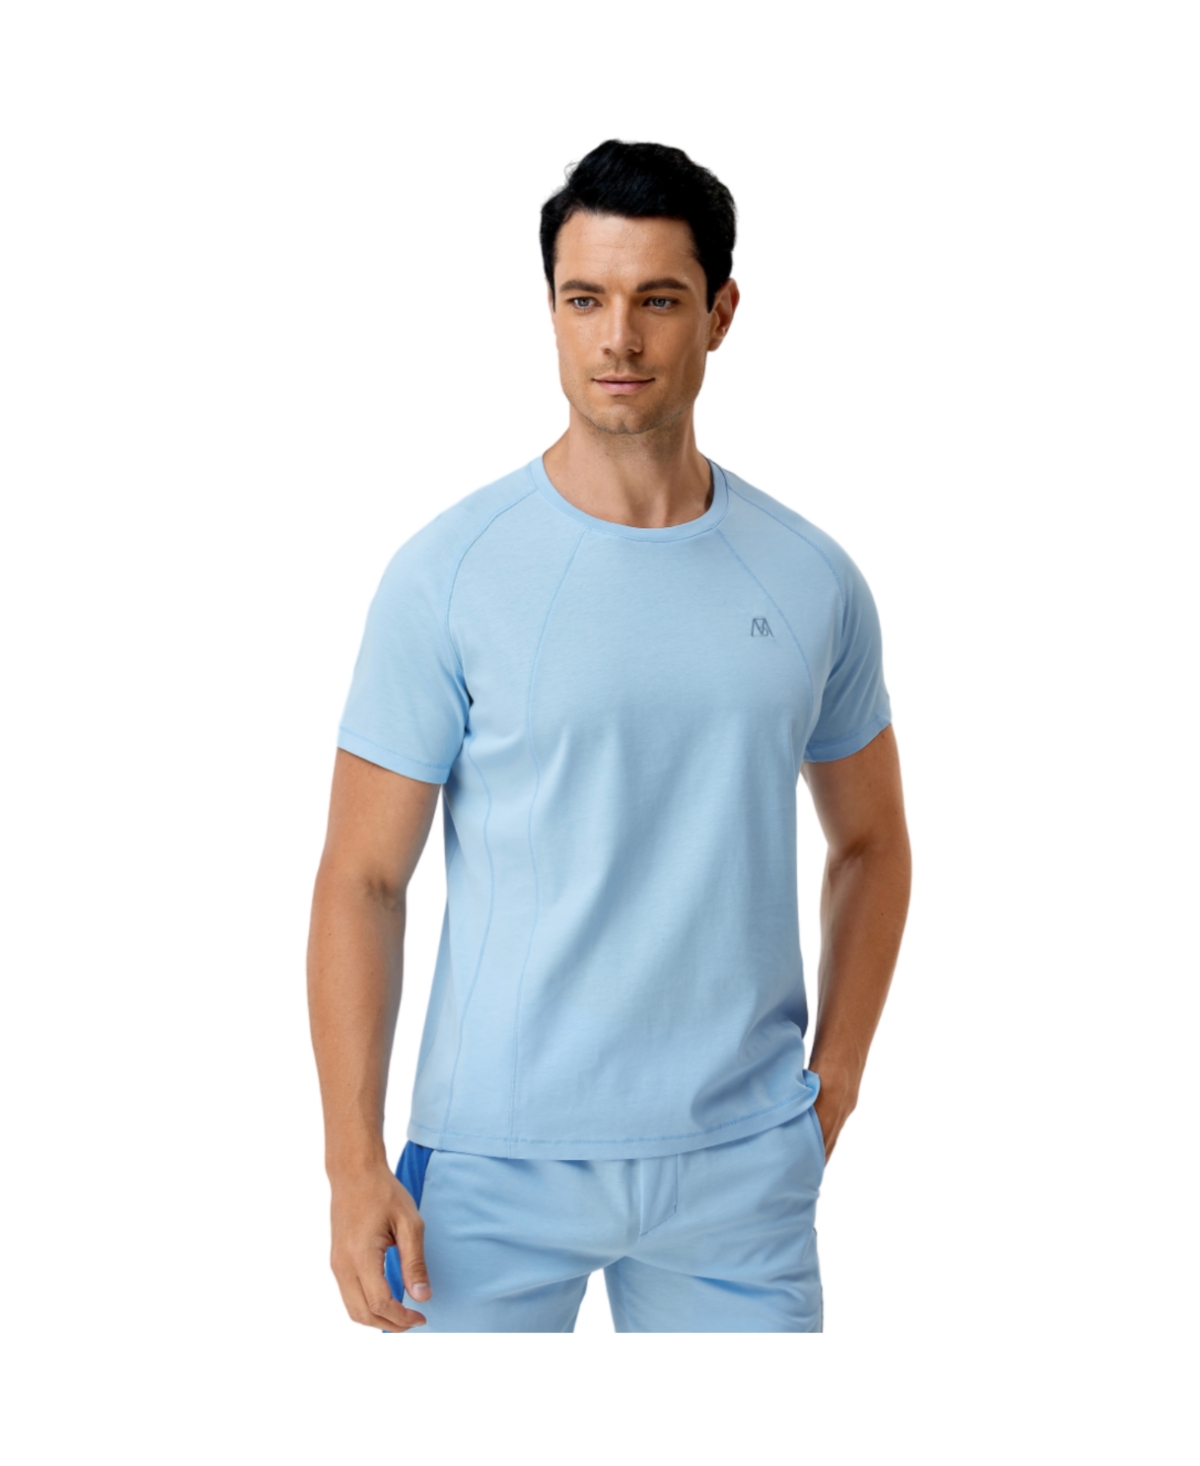 Men's Bellemere Men s Seam-Detailed T-Shirt - Blue